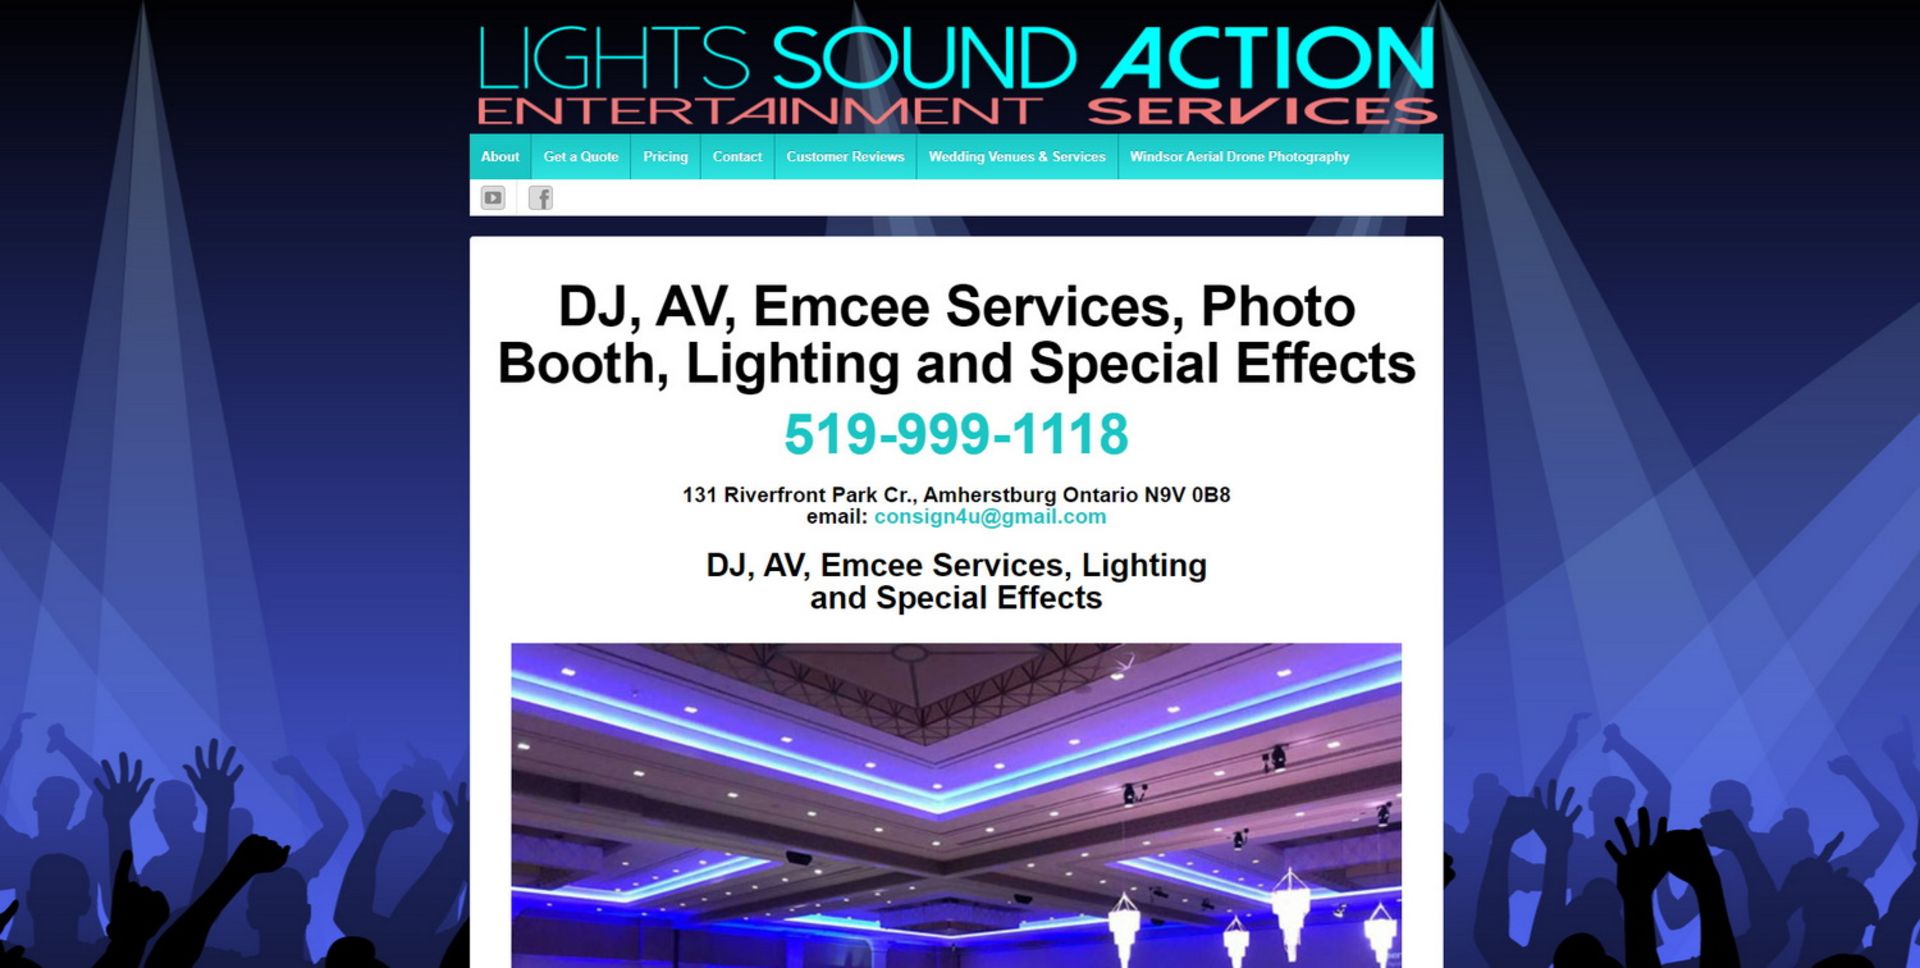 LOT - LIGHTS SOUND ACTION ENTERTAINMENT SERVICES WEBSITE (https://lightssoundaction.ca/) - BRANDED